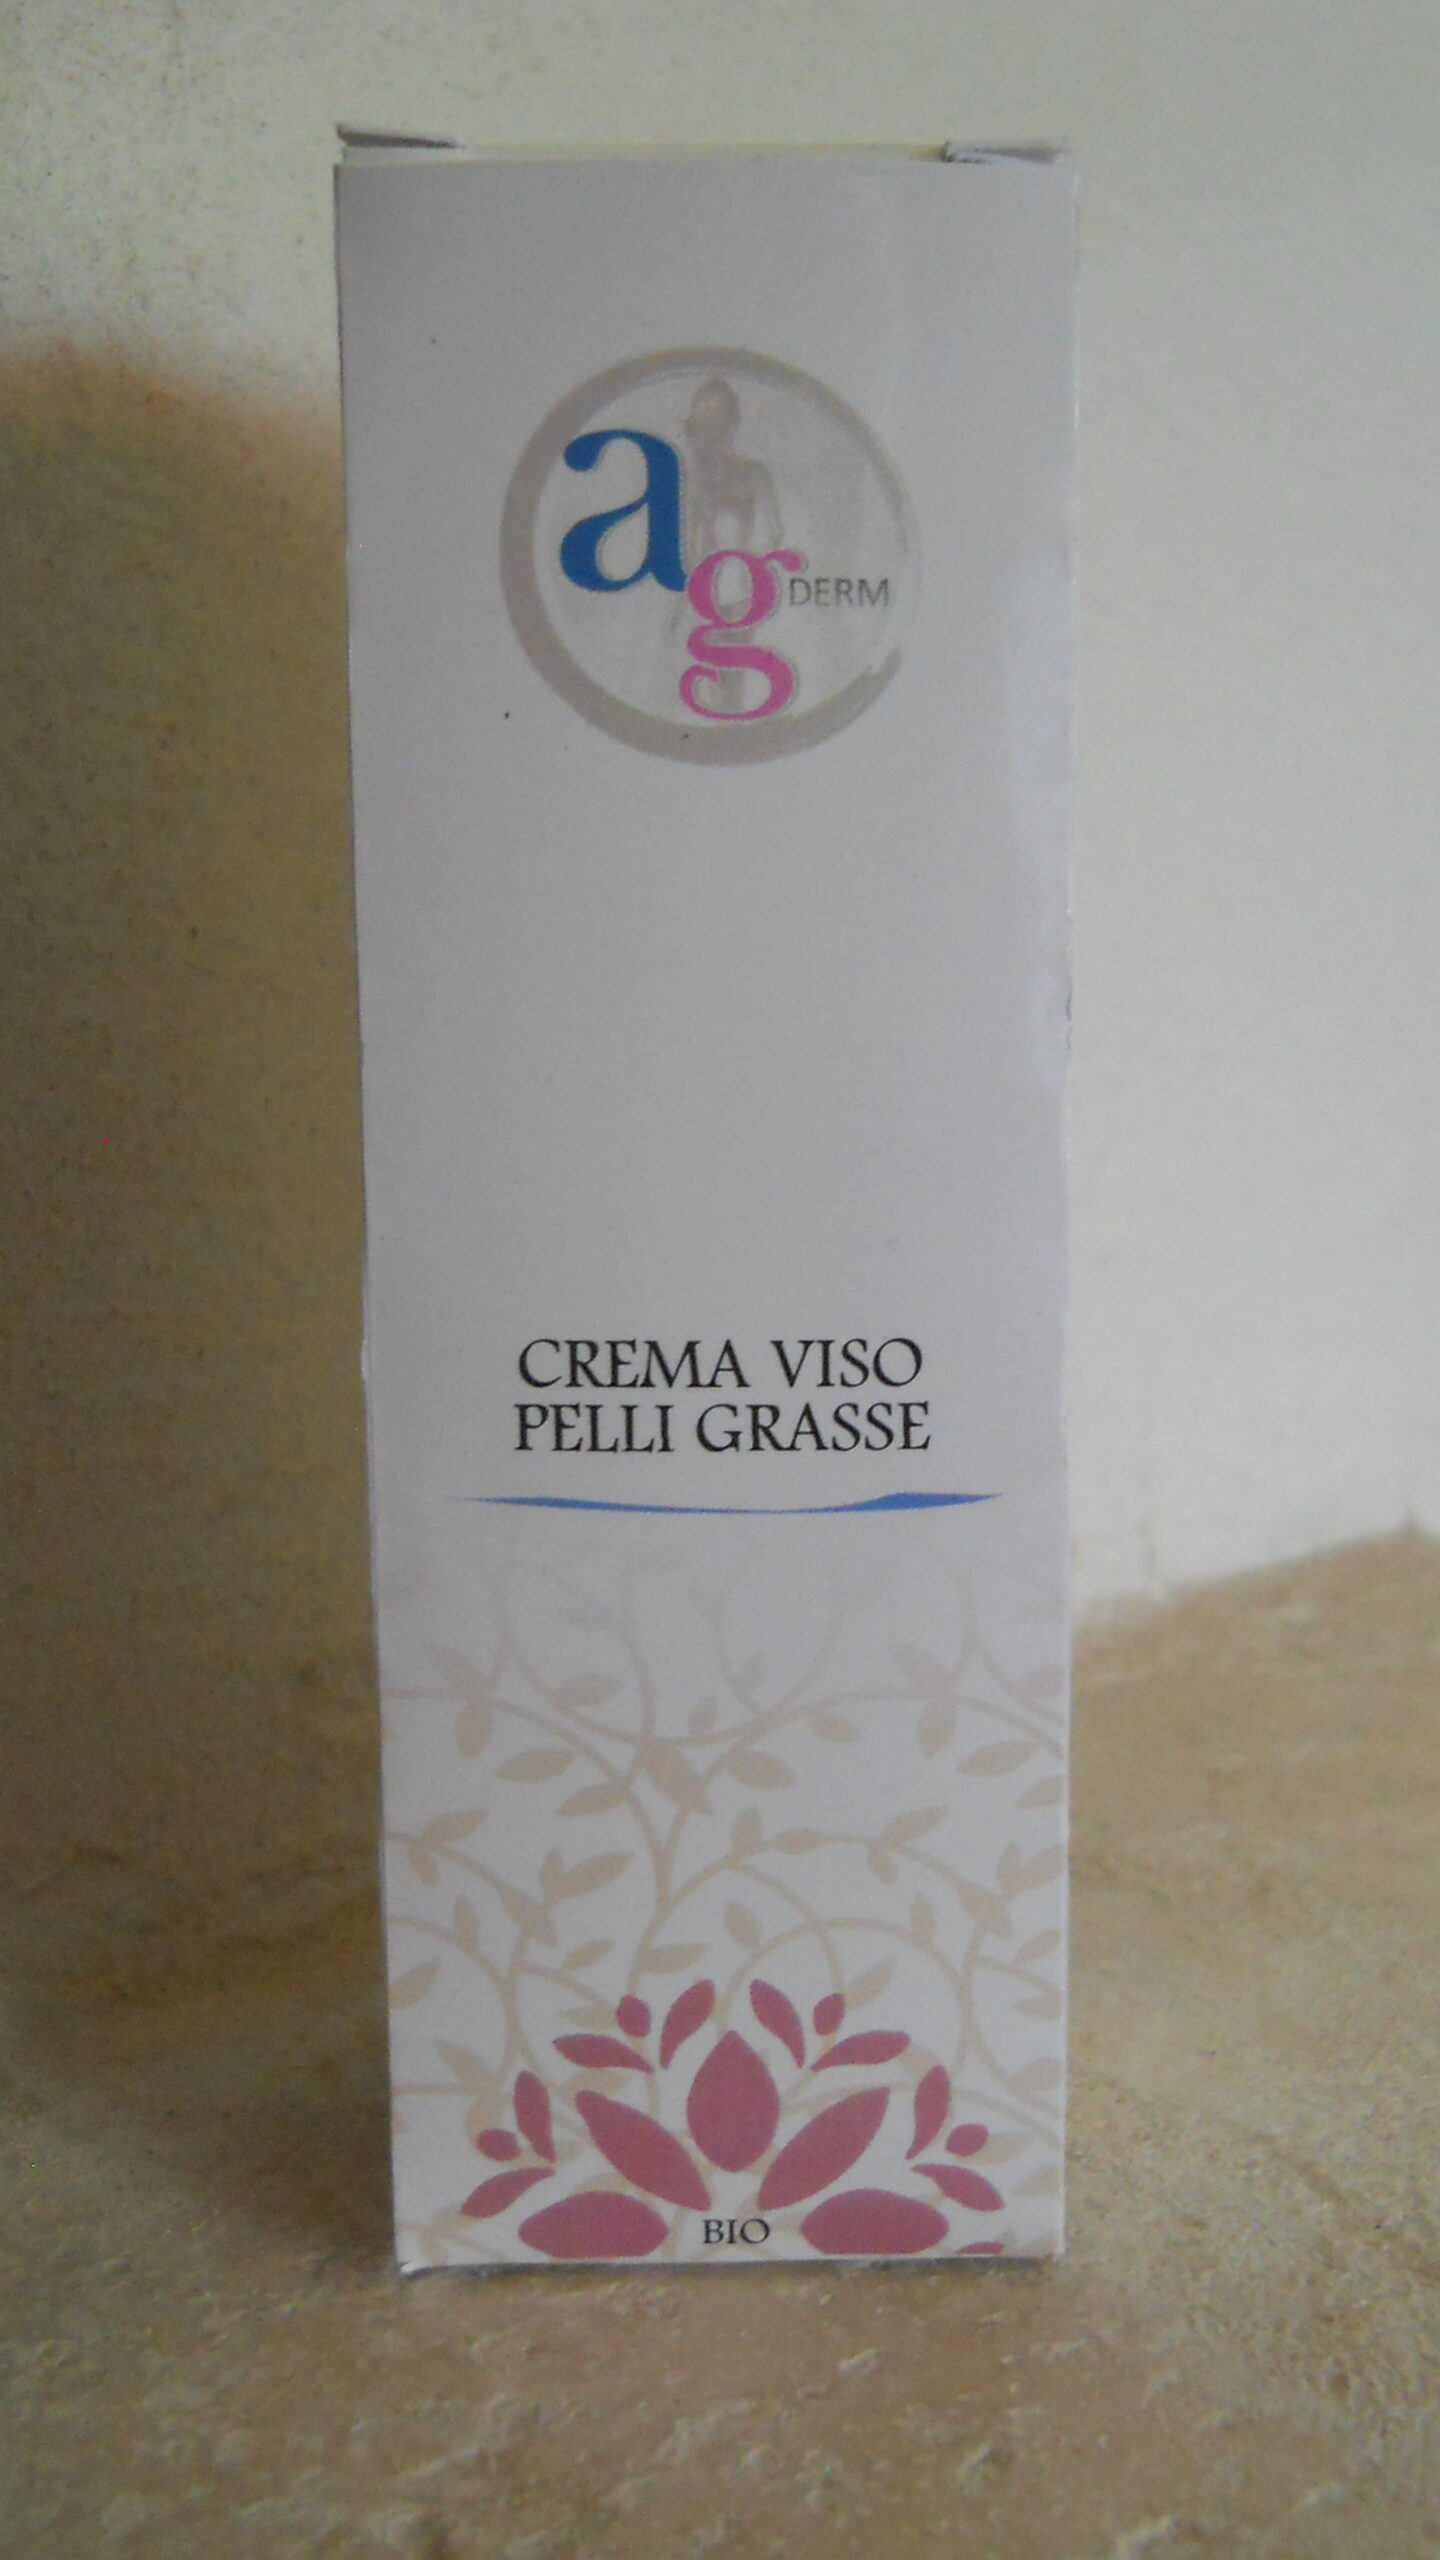 Featured image for “Crema Viso PELLI GRASSE 50 ml. Cosmetica Bio AG Derm”